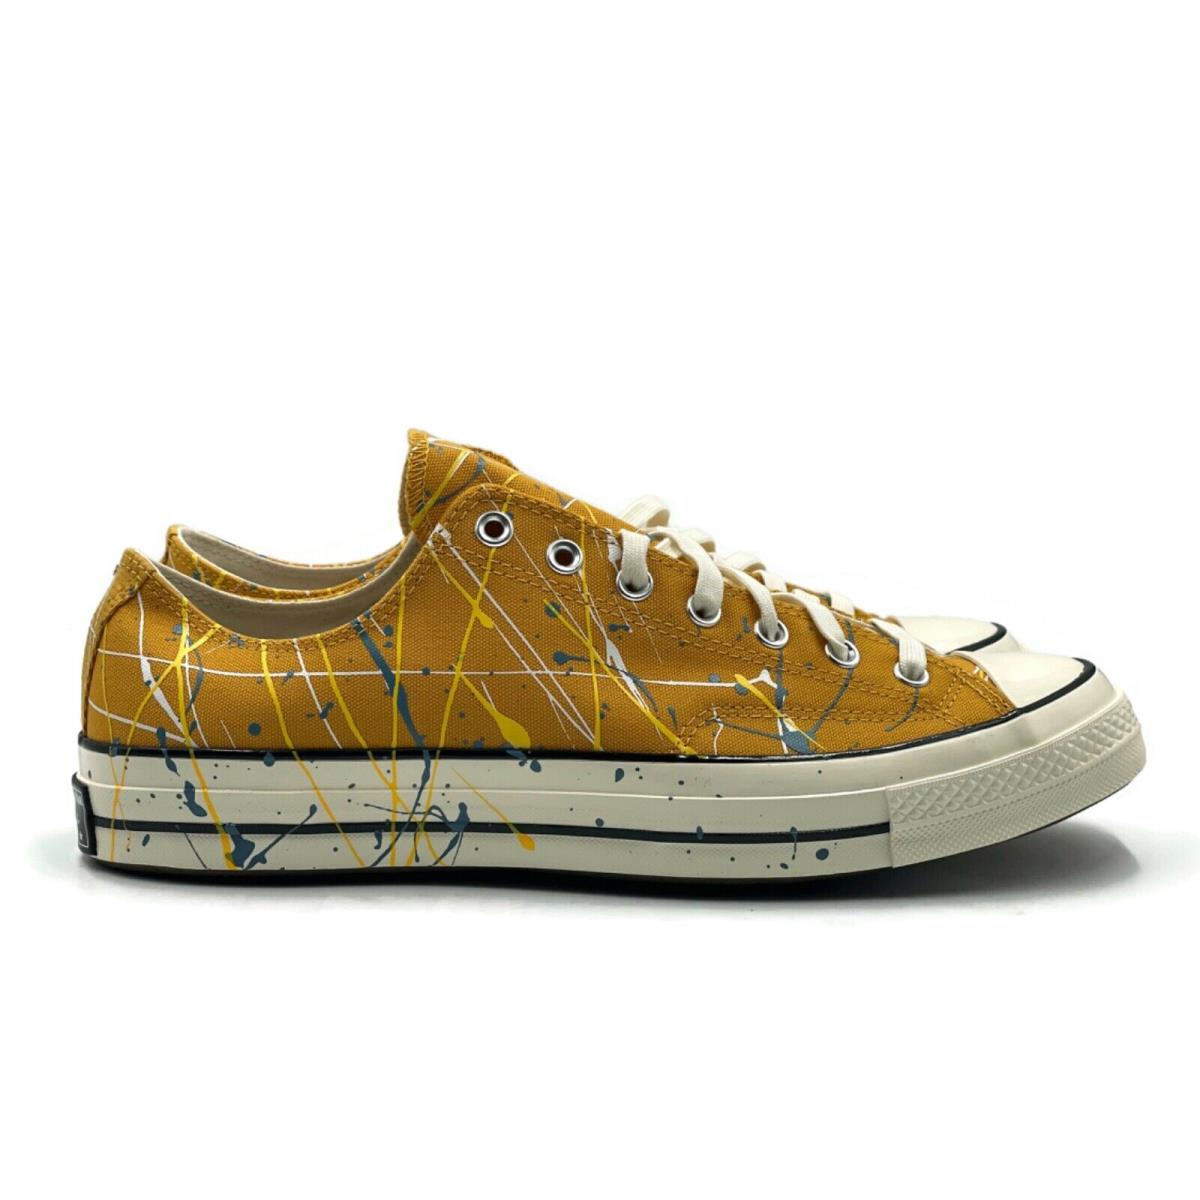 Converse Chuck 70 OX Paint Splatter Mens Skate Shoe Gold White Trainer Sneaker - Gold White Multicolor